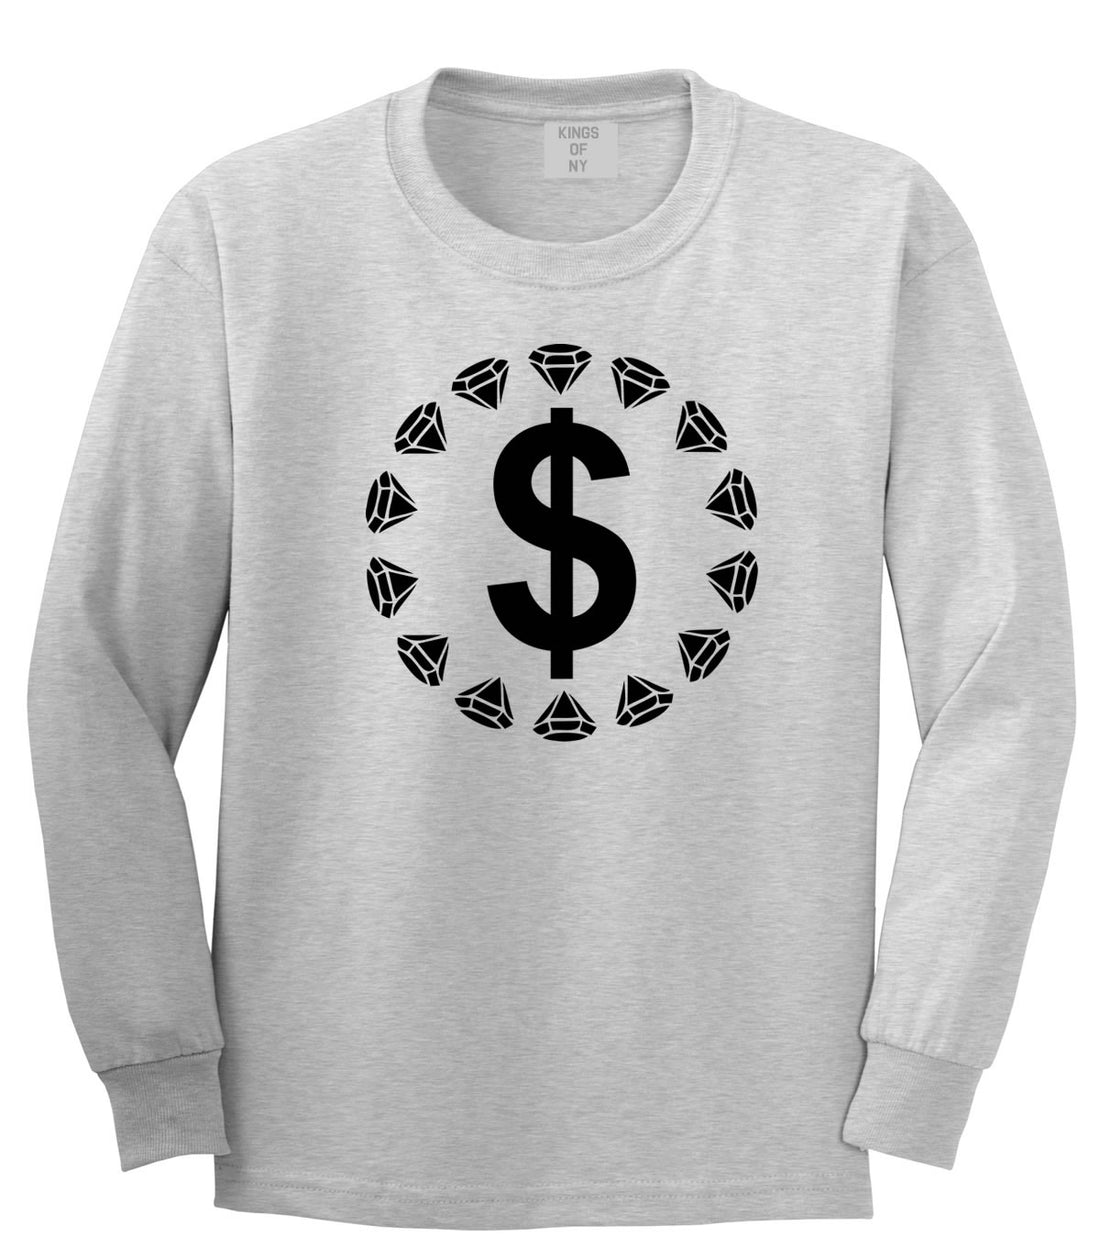 Diamonds Money Sign Logo Long Sleeve T-Shirt in Grey by Kings Of NY